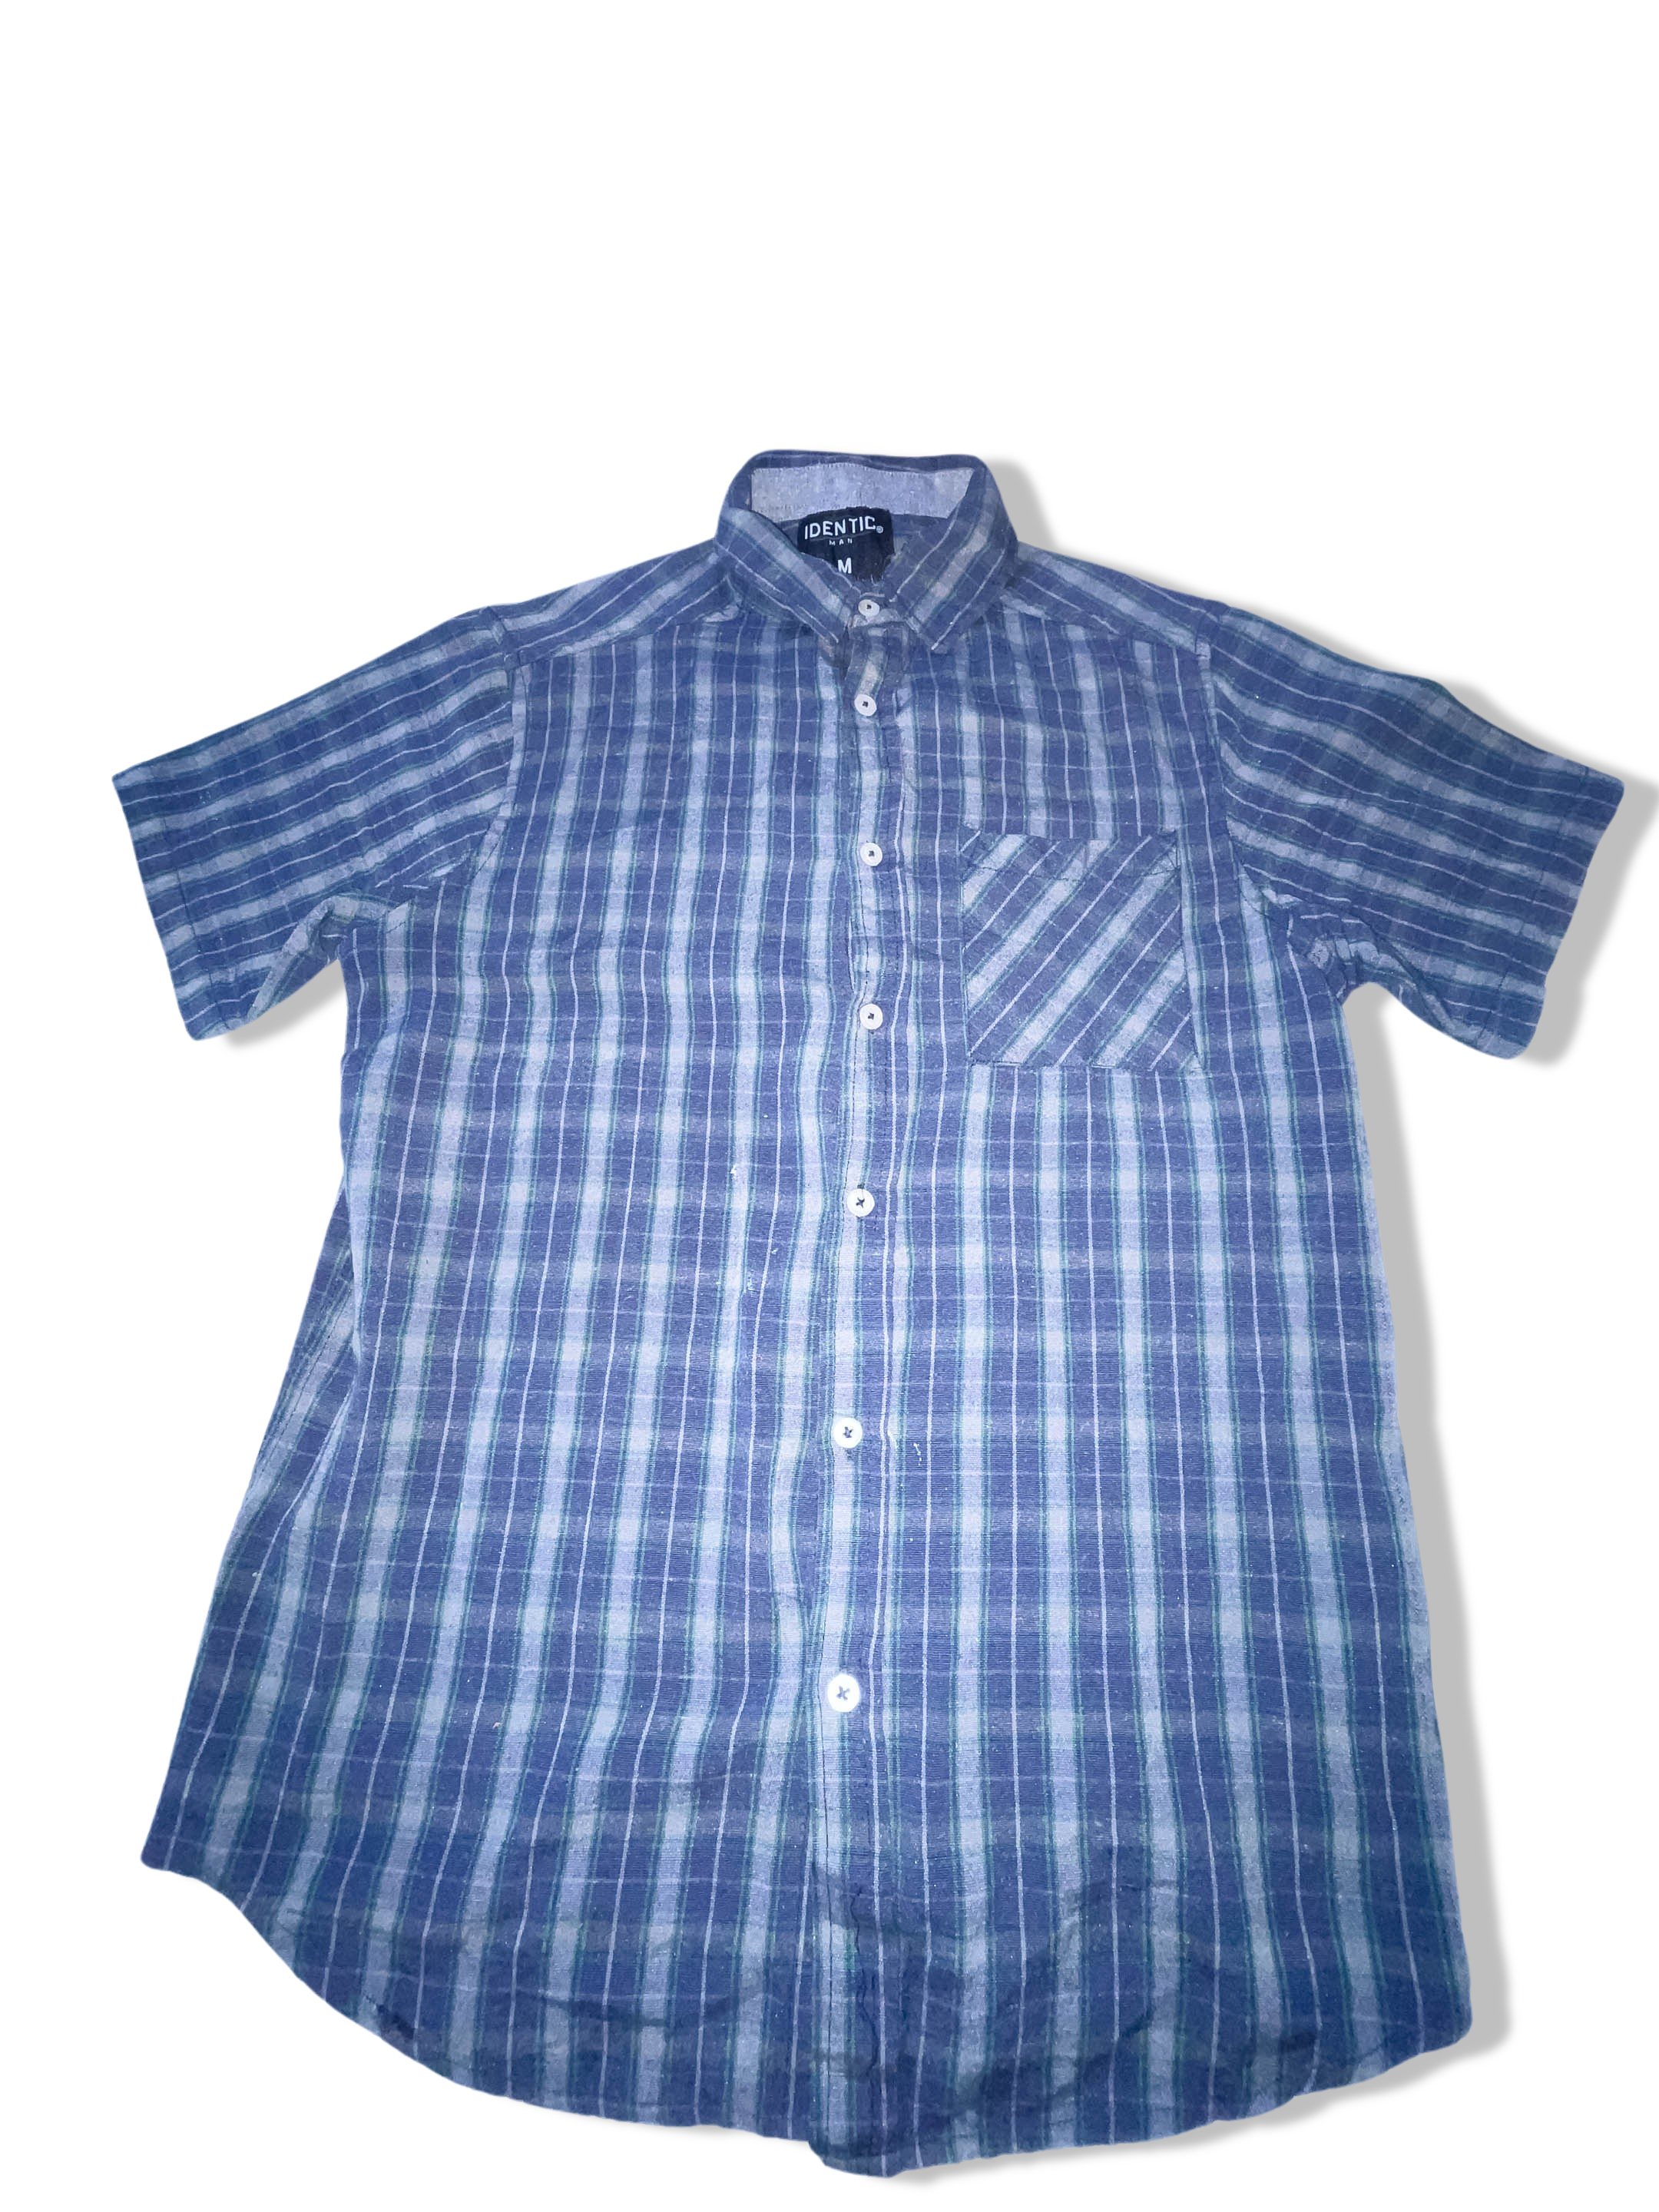 Vintage Identic man blue checkered medium short sleeve shirt